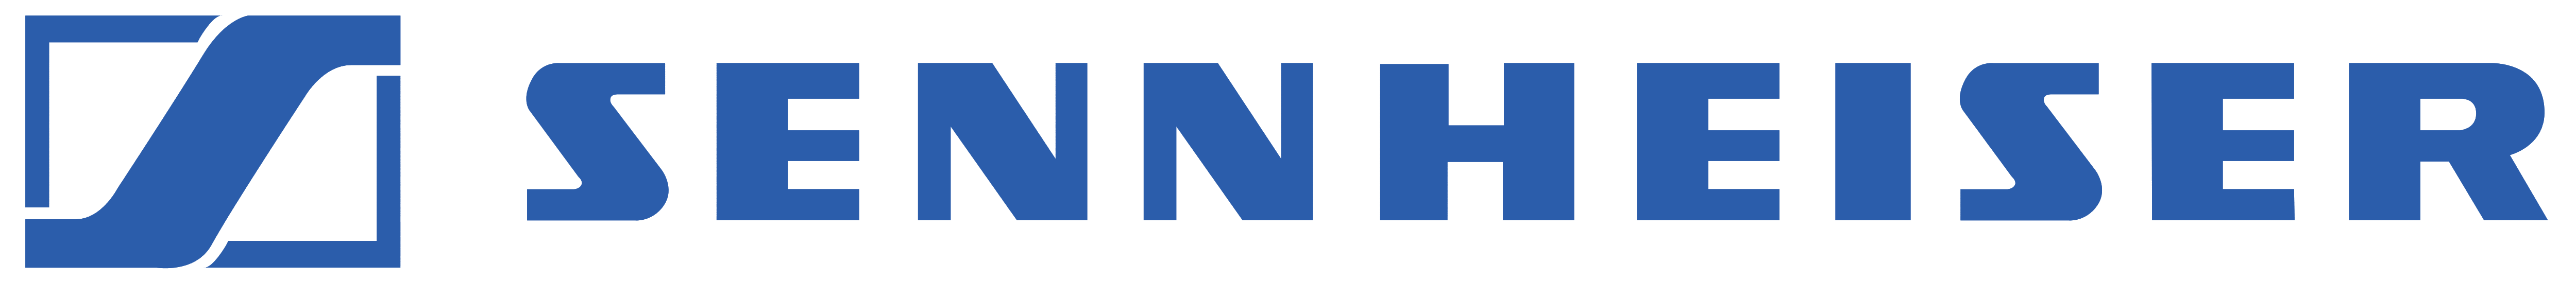 SENNHEISER-logo